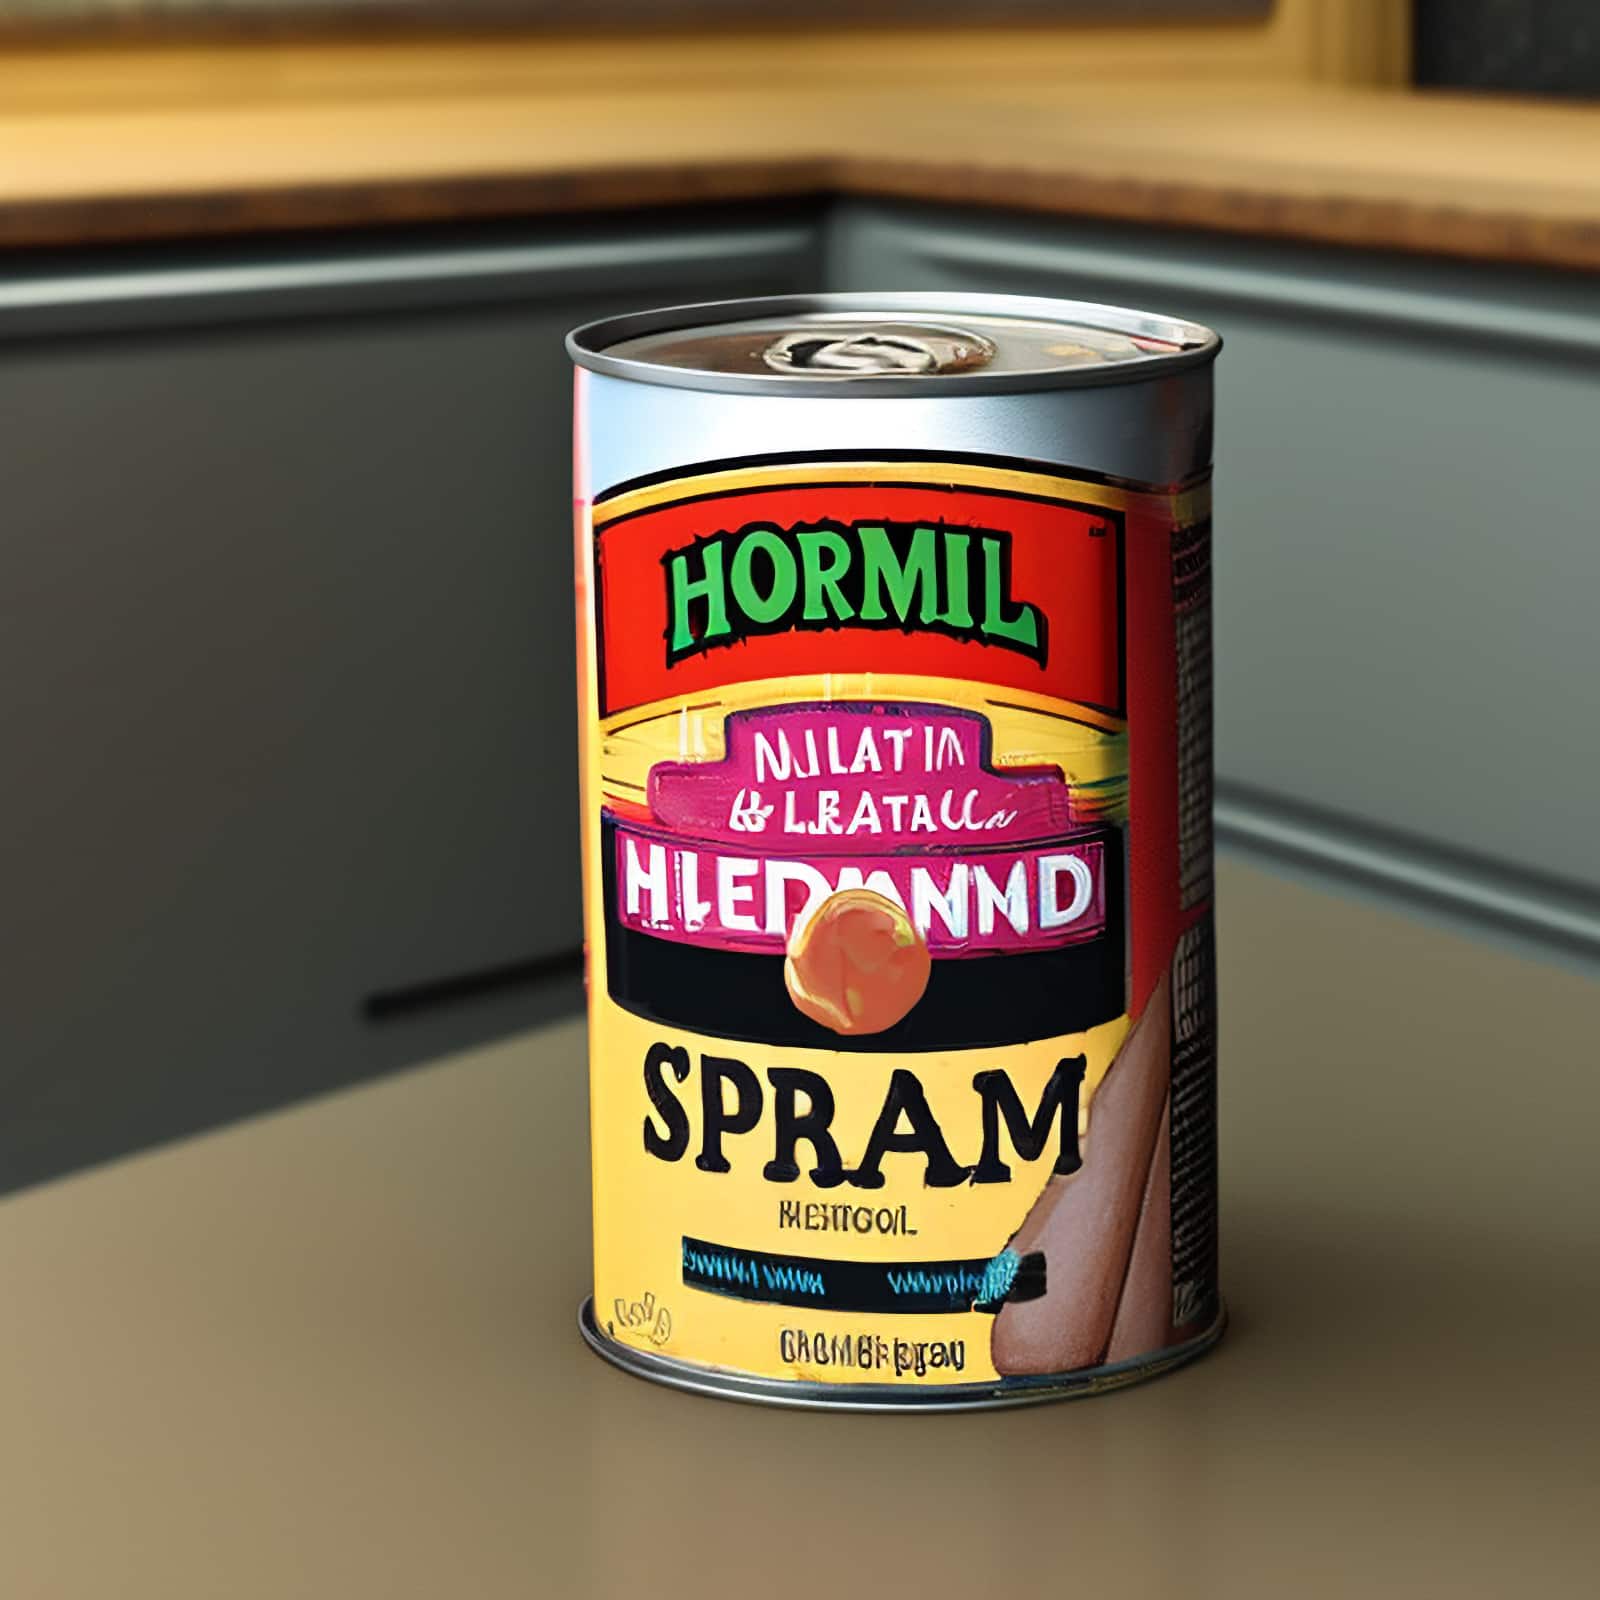 Can of SPAM - sorta. AI